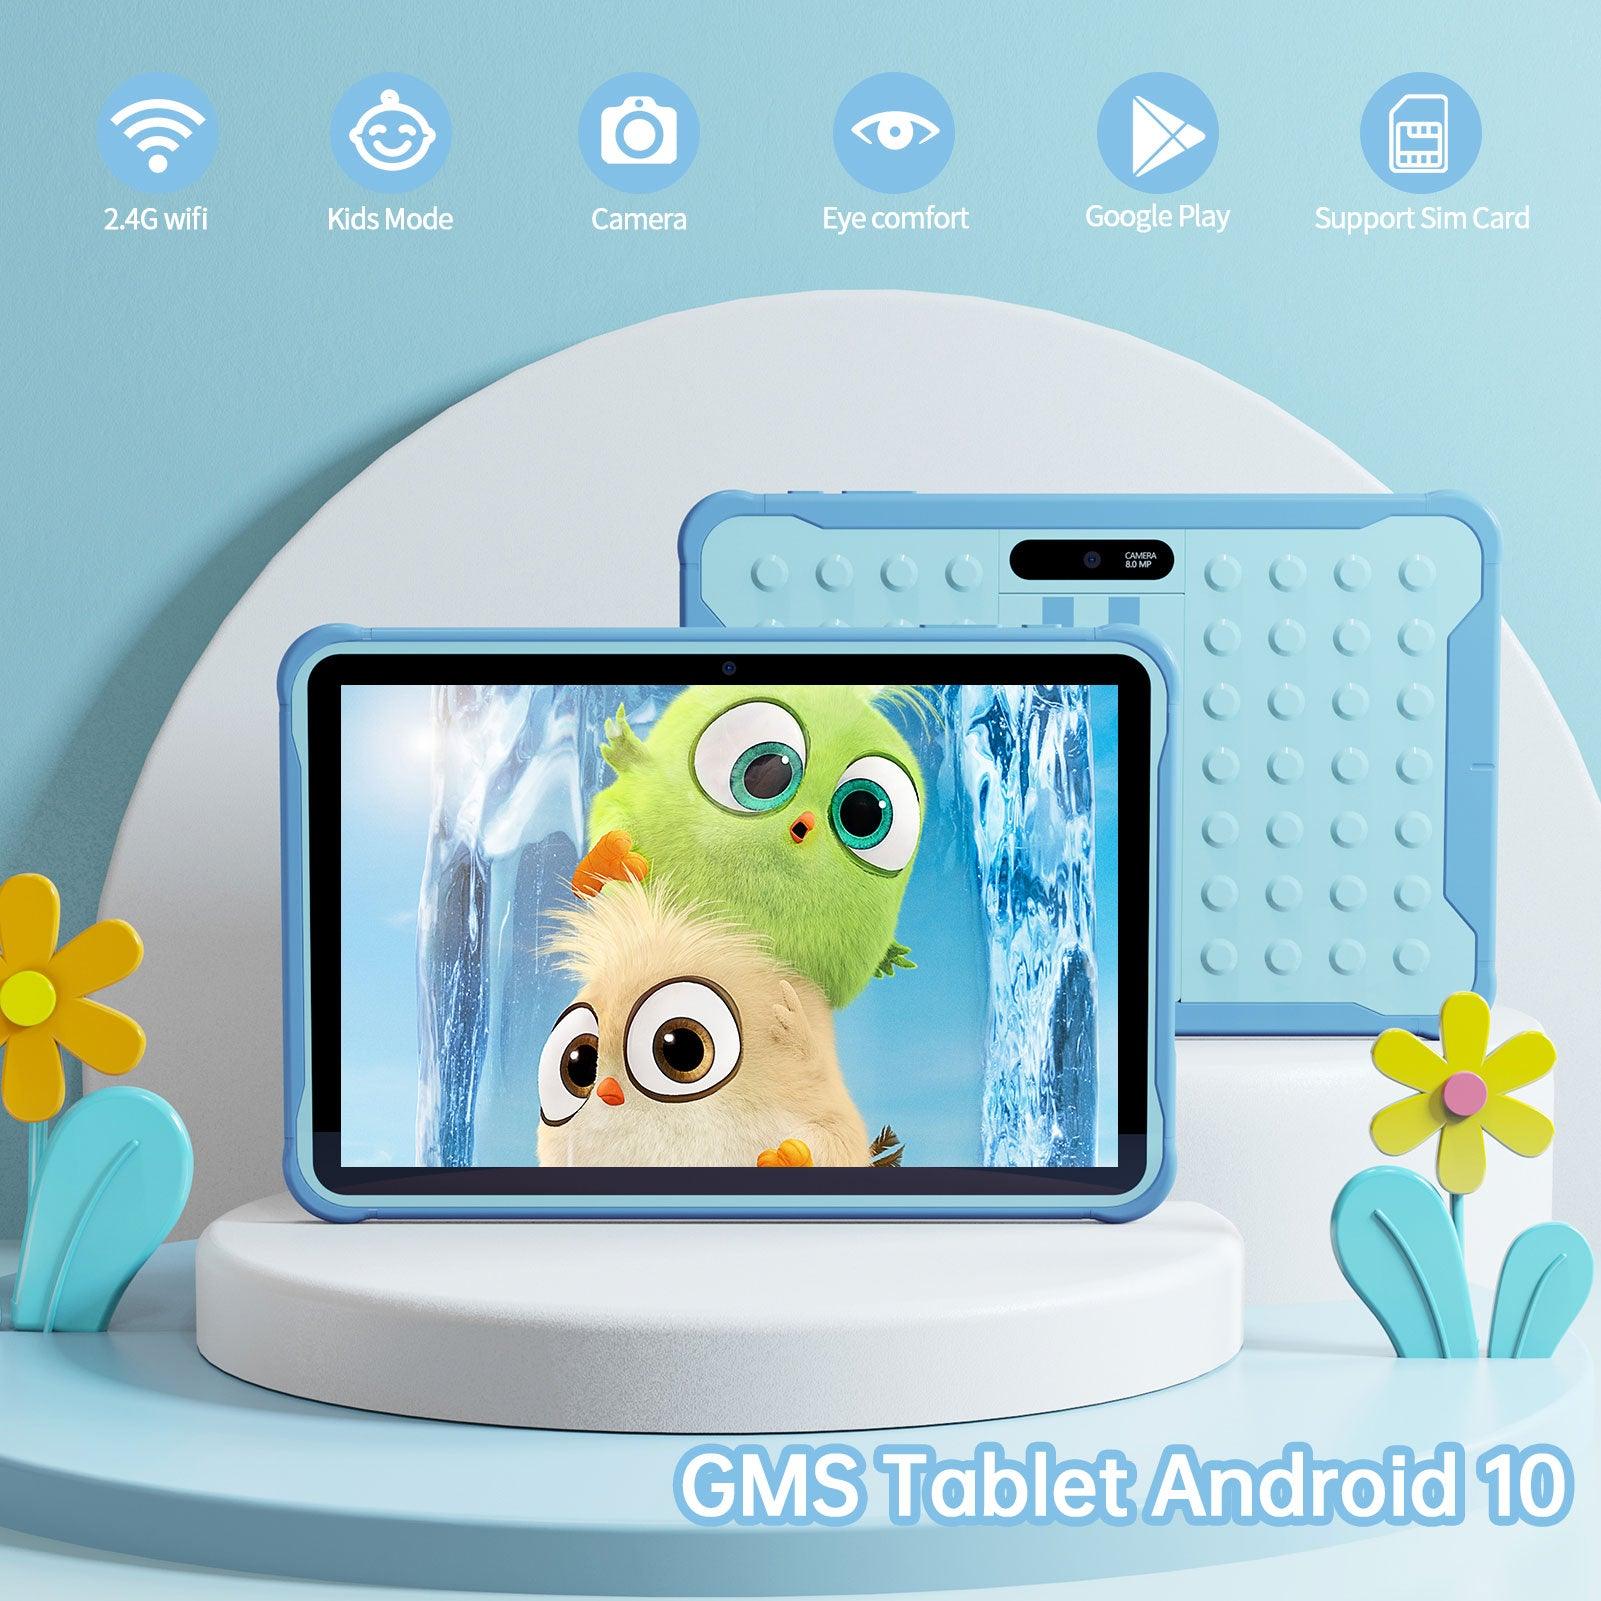 PRITOM Kids Tablet, 10.1 inch HD IPS Screen, Parental Control, 6000mAh Battery, Quad Core Processor, 2GB RAM, 32GB ROM, Dual Camera 2MP + 8MP, with Kids-Tablet Case - AngelEze